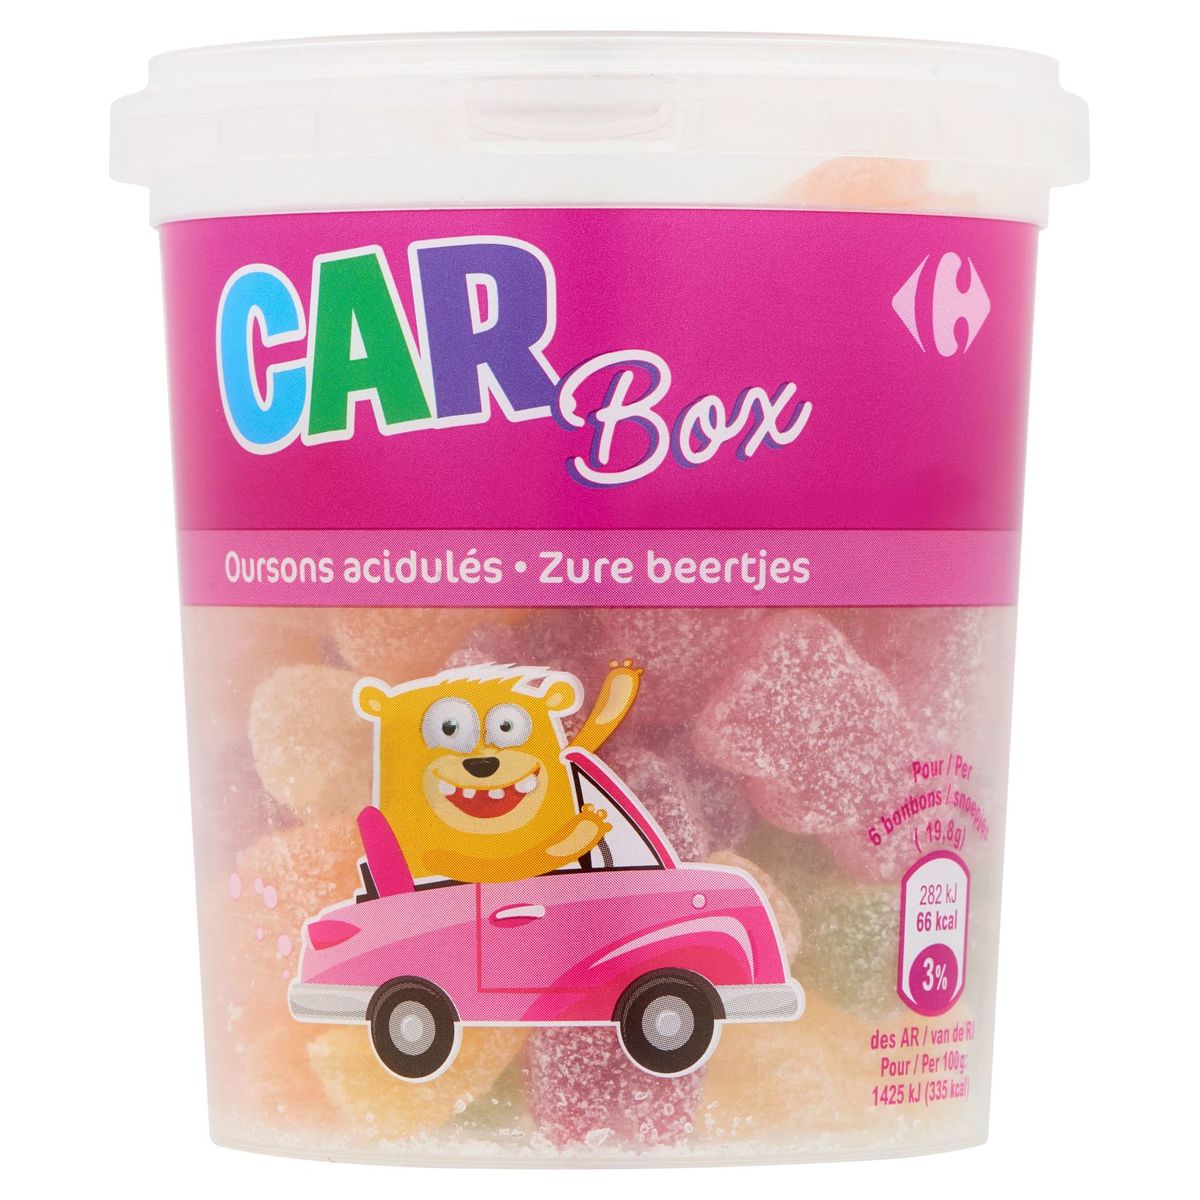 Carrefour Car Box Zure Beertjes 220 g